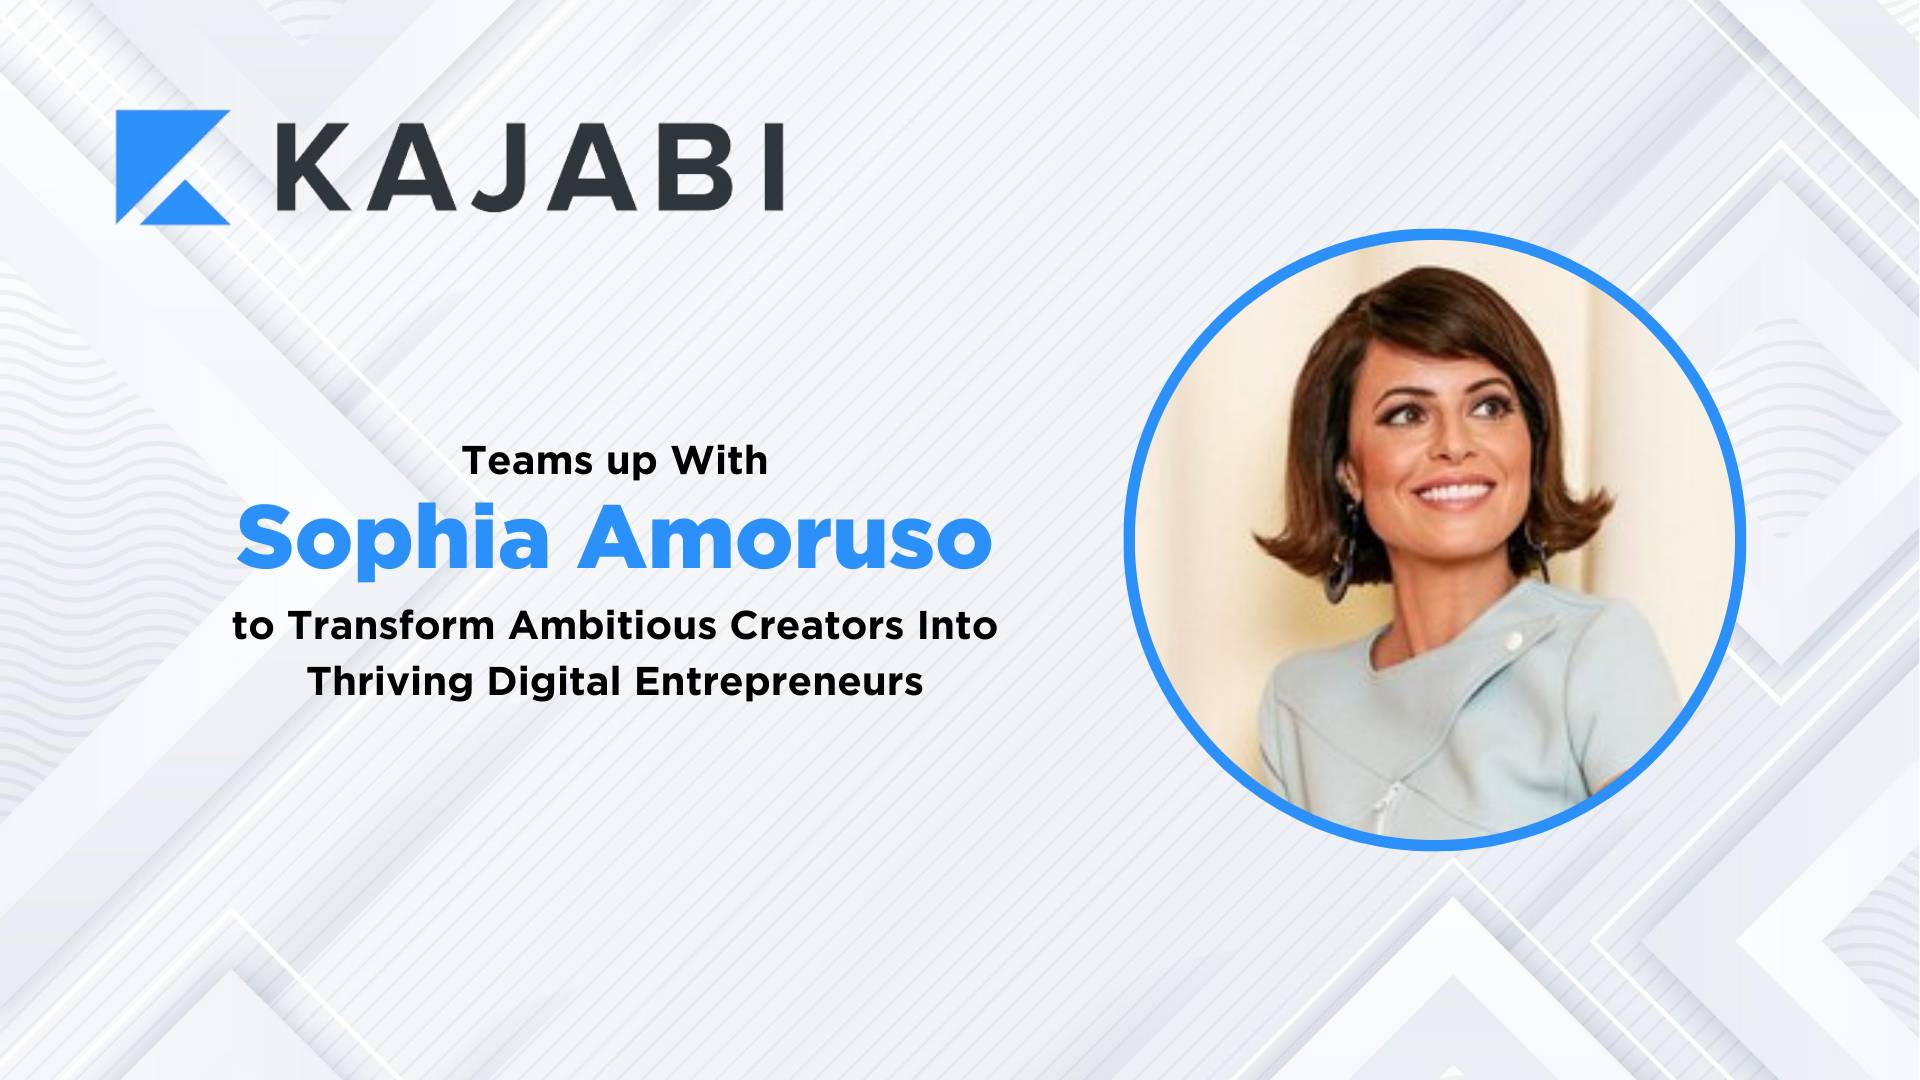 Kajabi teams up with Sophia Amoruso to transform ambitious creators into thriving digital entrepreneurs